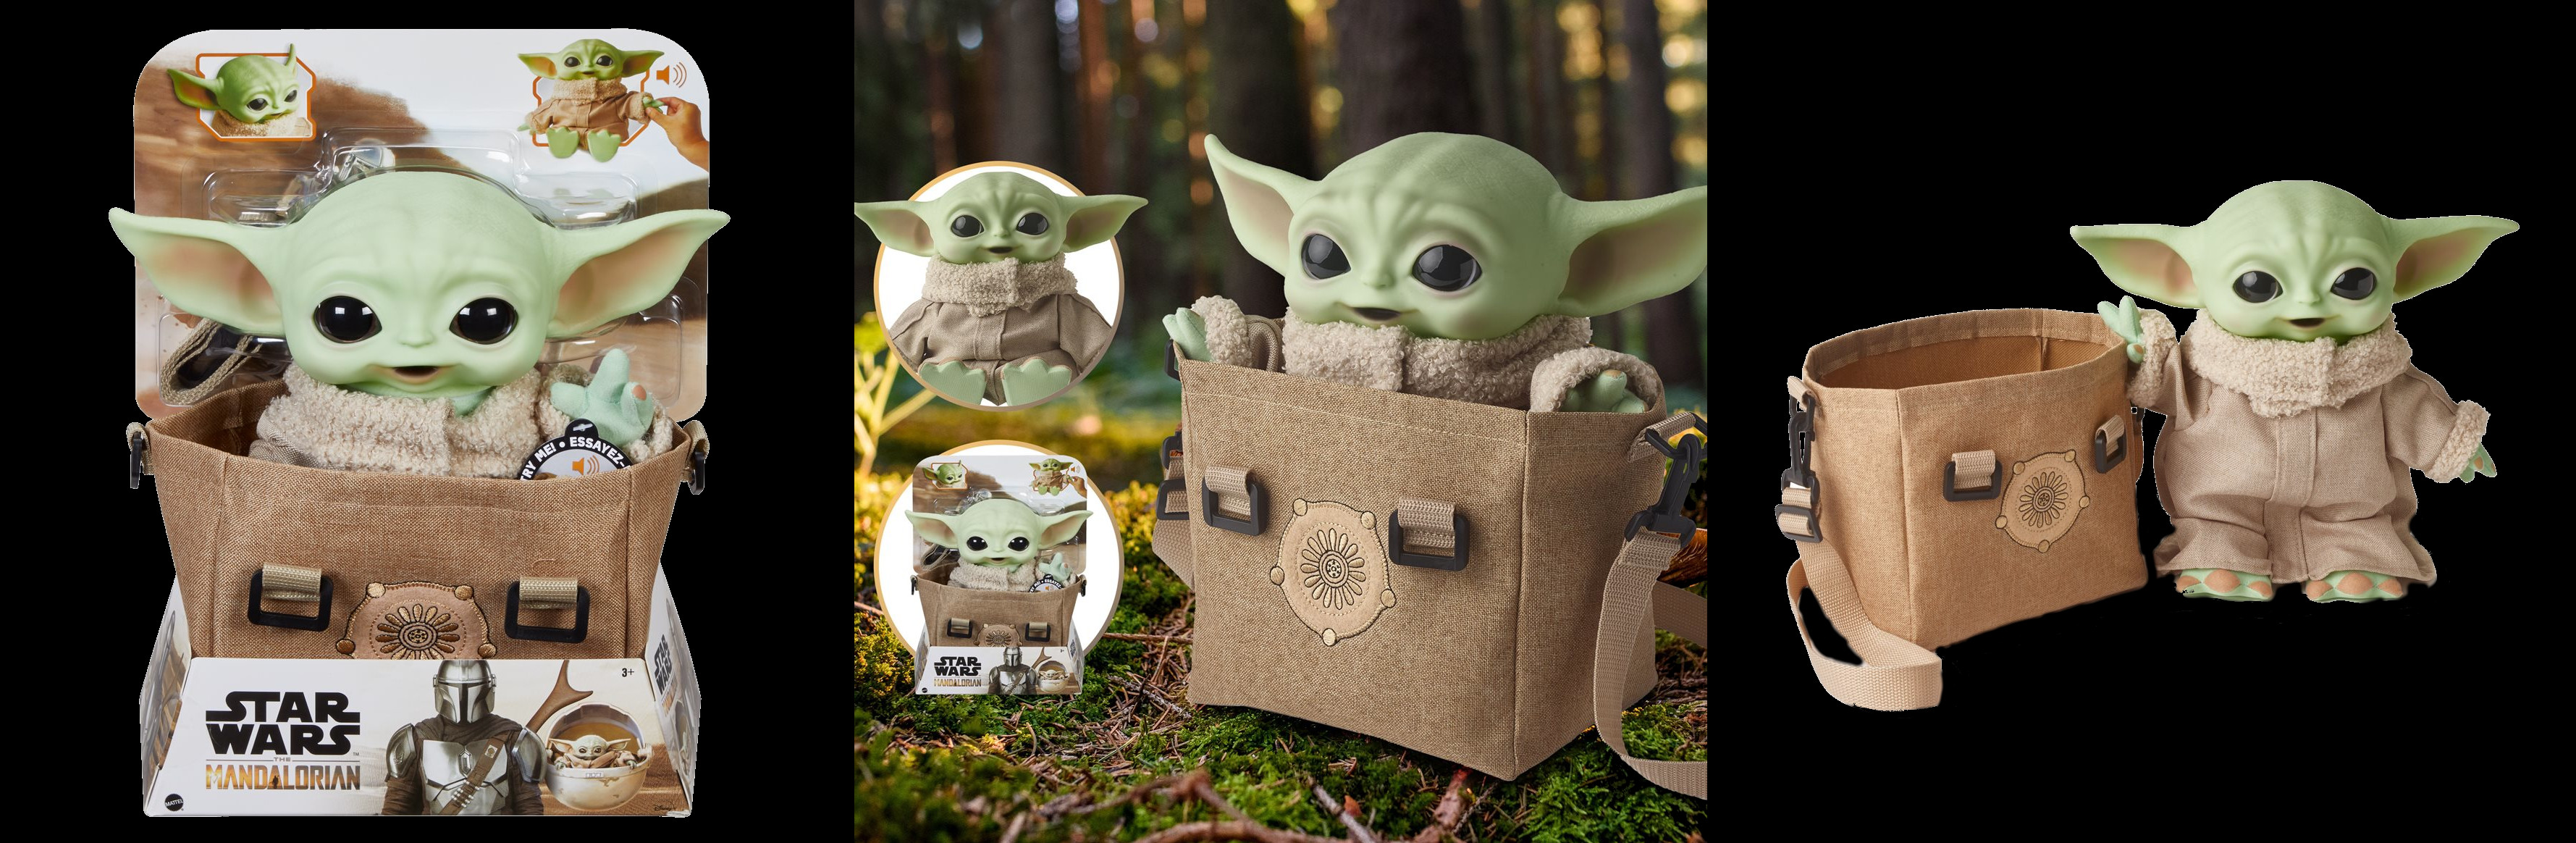 Disney Star Wars Mandalorian Baby Yoda The Child avec tasse Plush Toy 4 To Collect